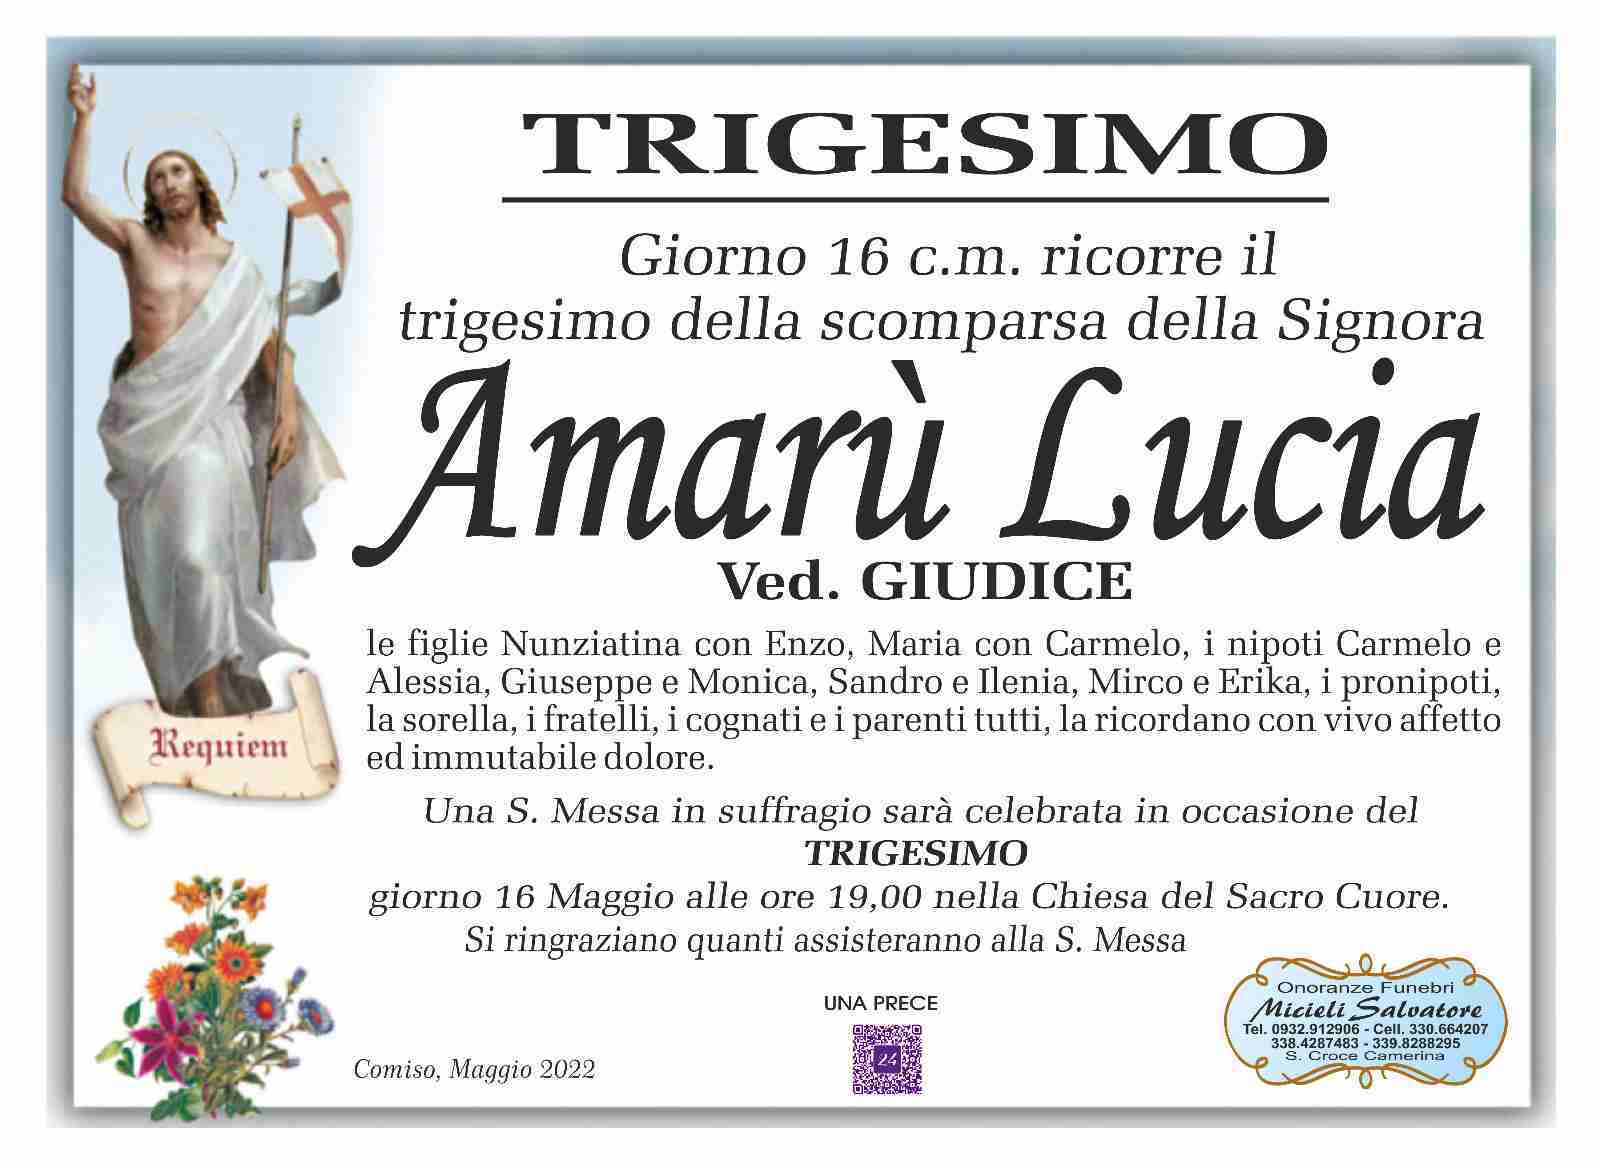 Lucia Amarù